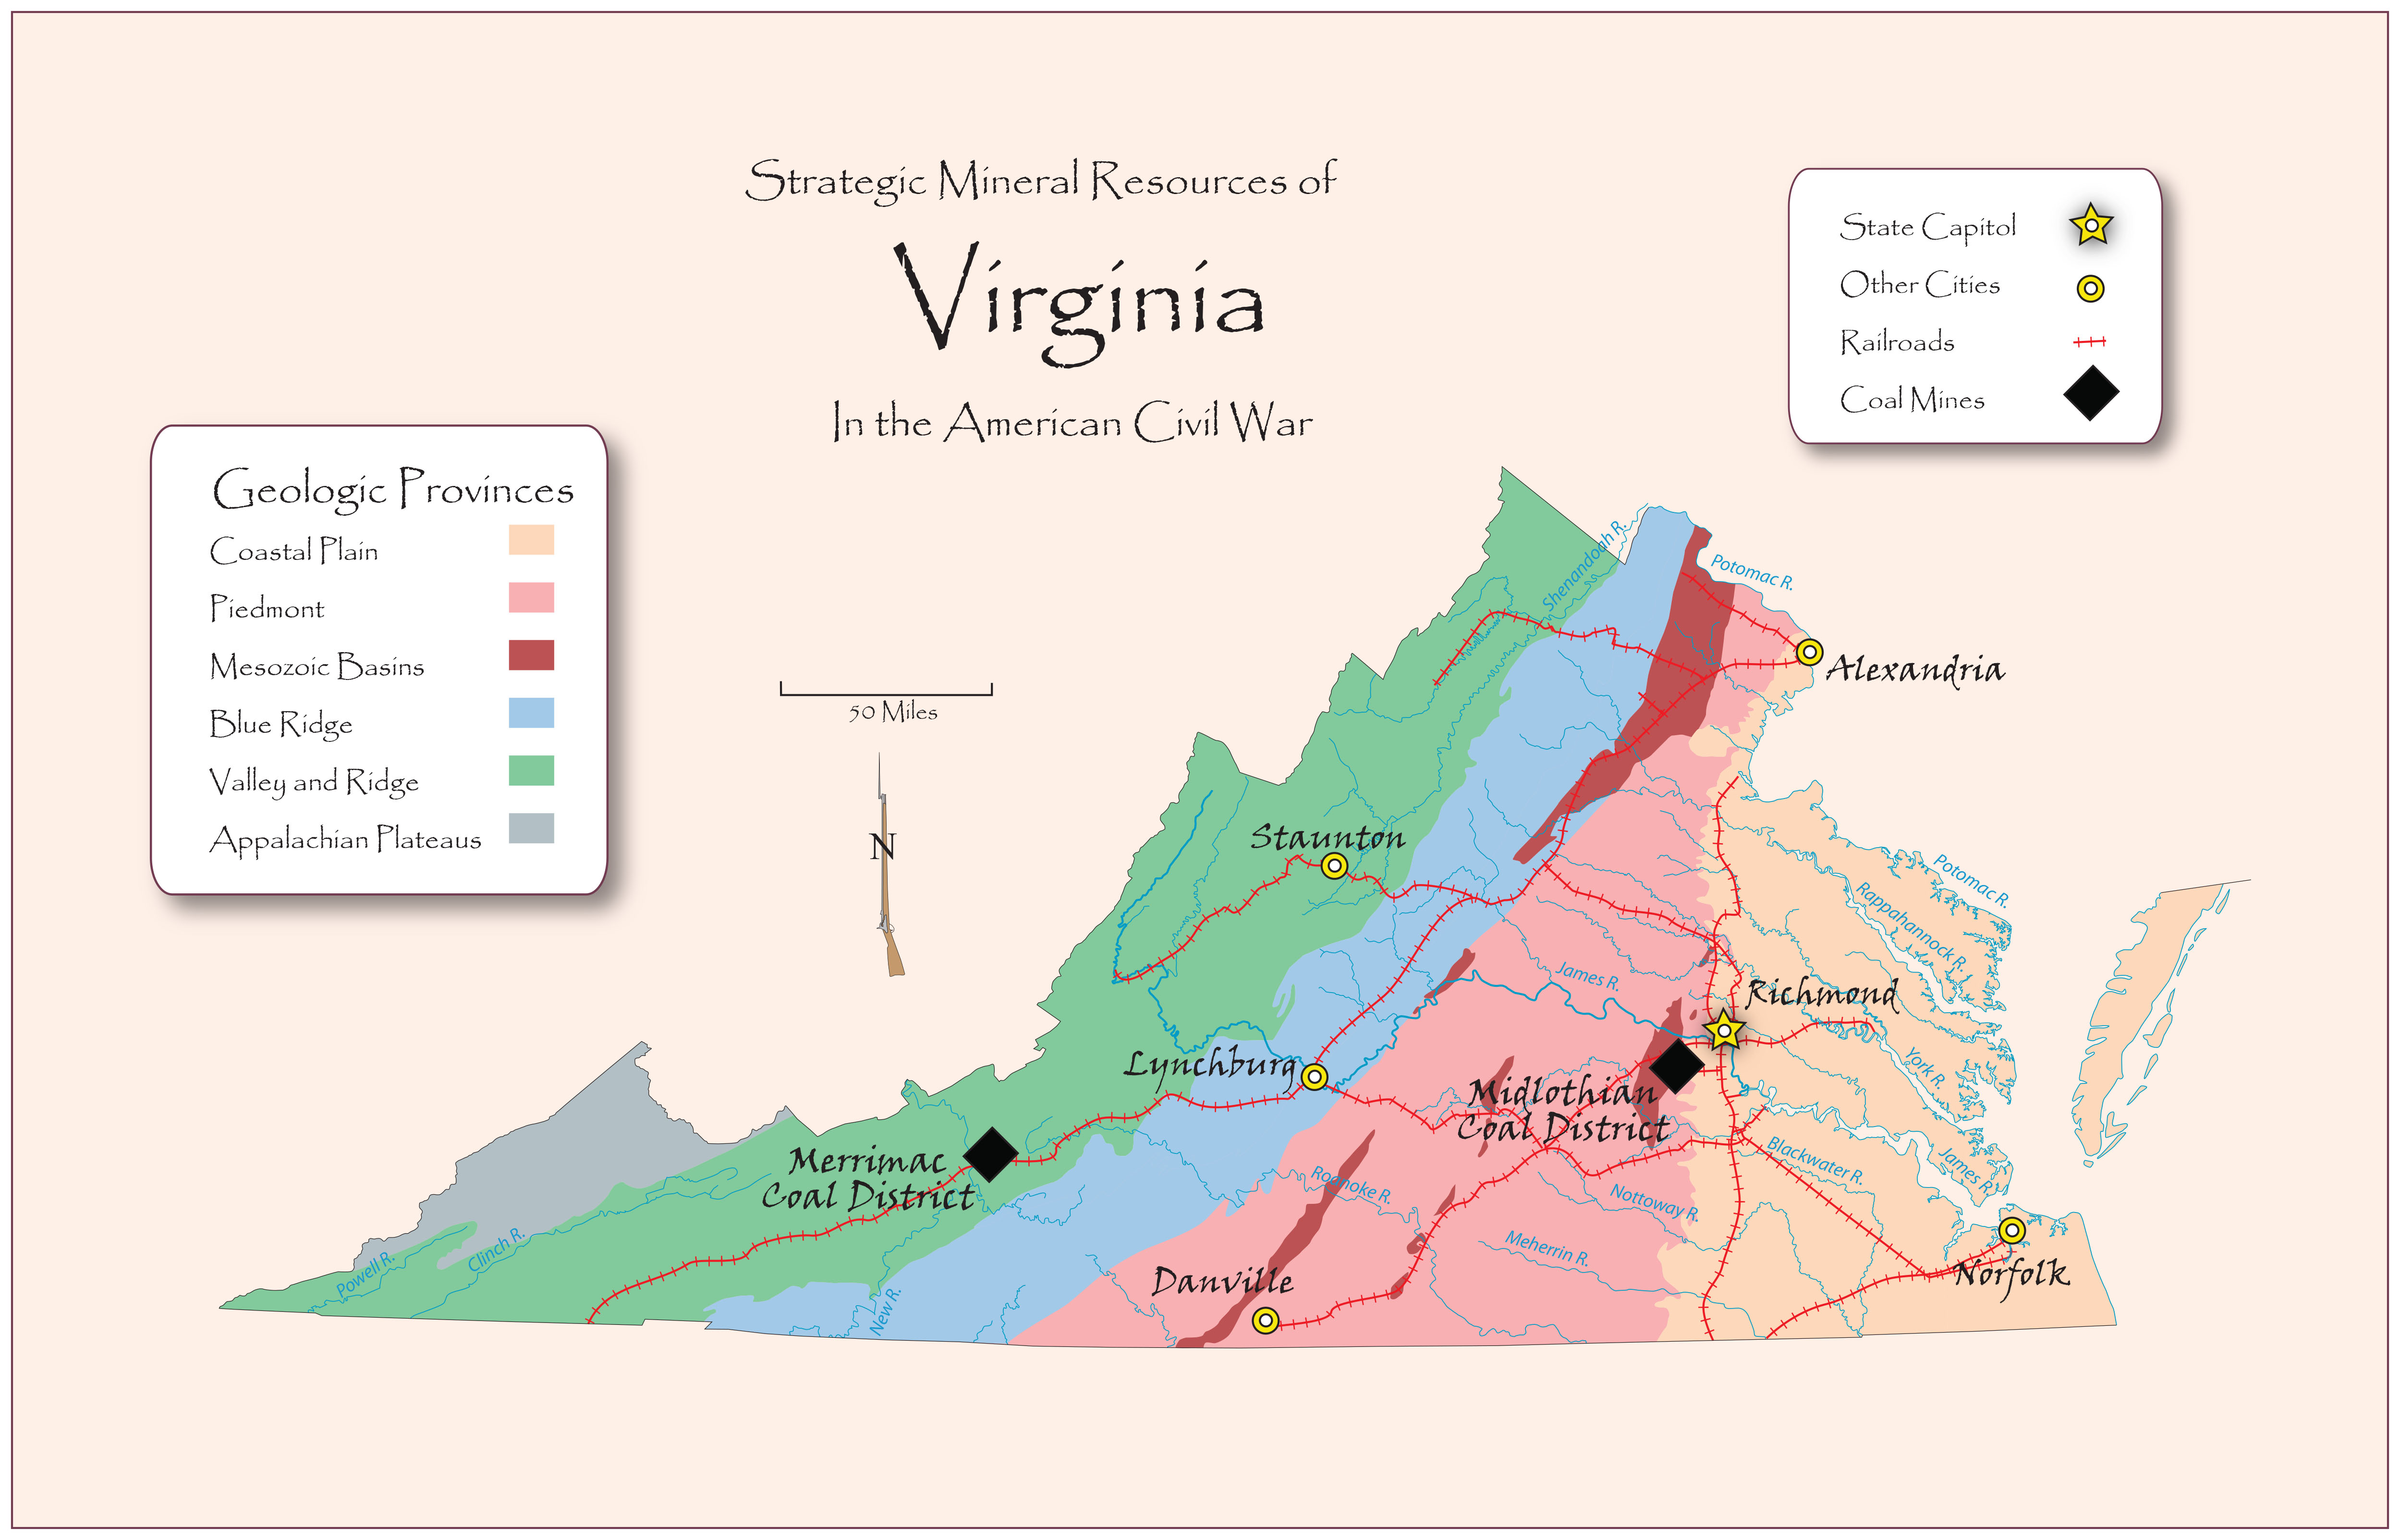 Strategic Mineral Resources of Virginia in the American Civil War - Coal